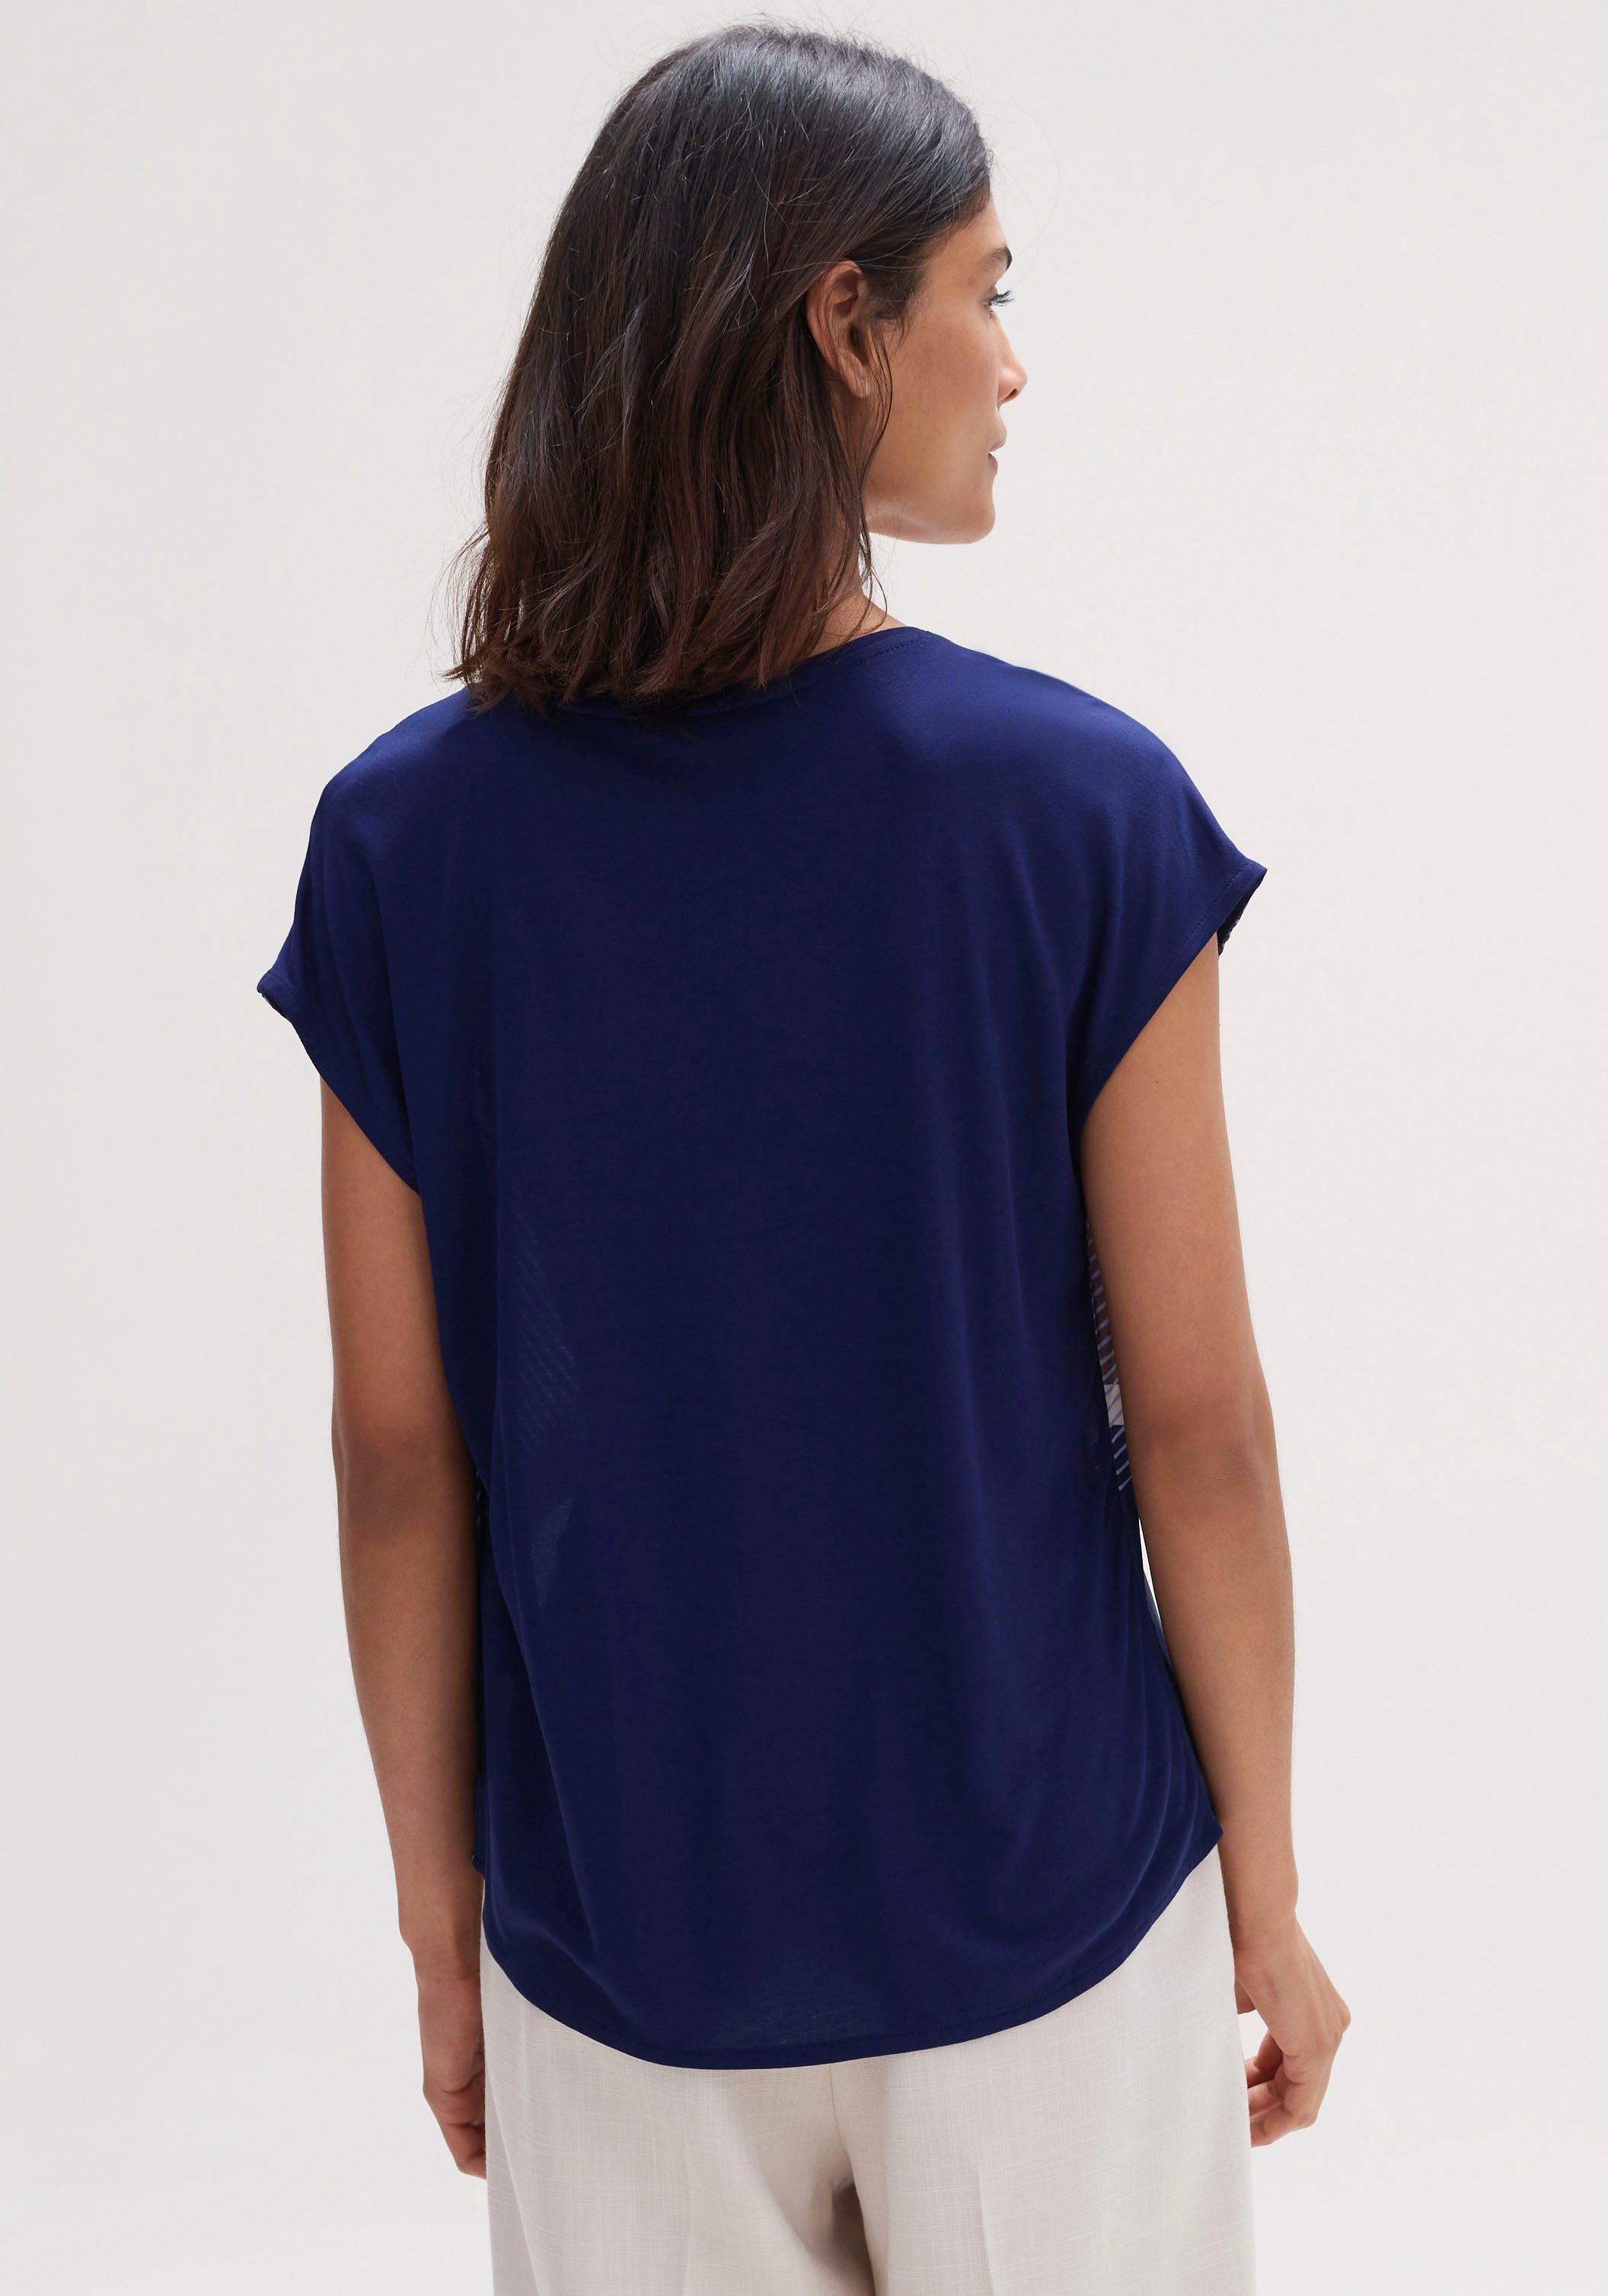 Print-Shirt HOUR OPUS Sadoli mit überschnittenem BLUE Kurzarm